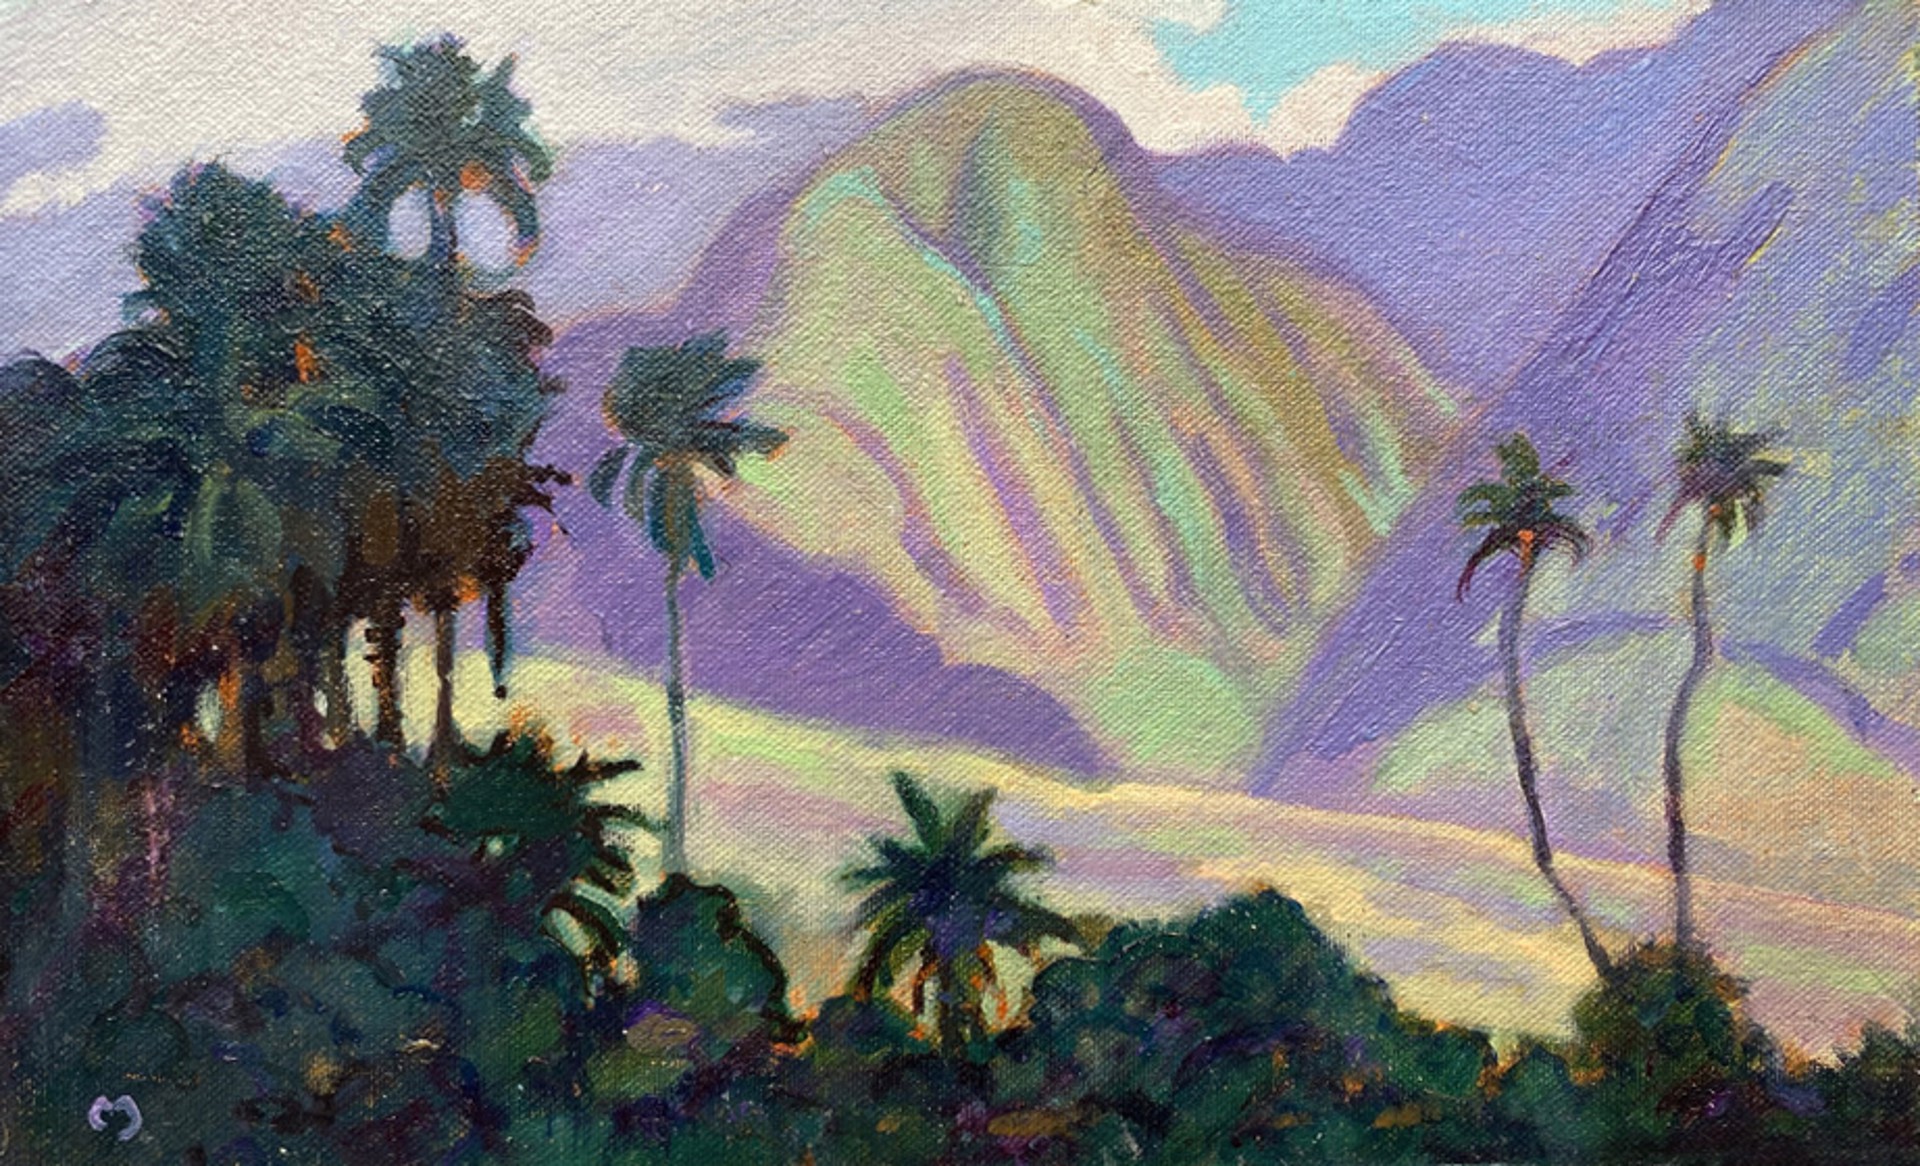 Maui by Dennis Morton